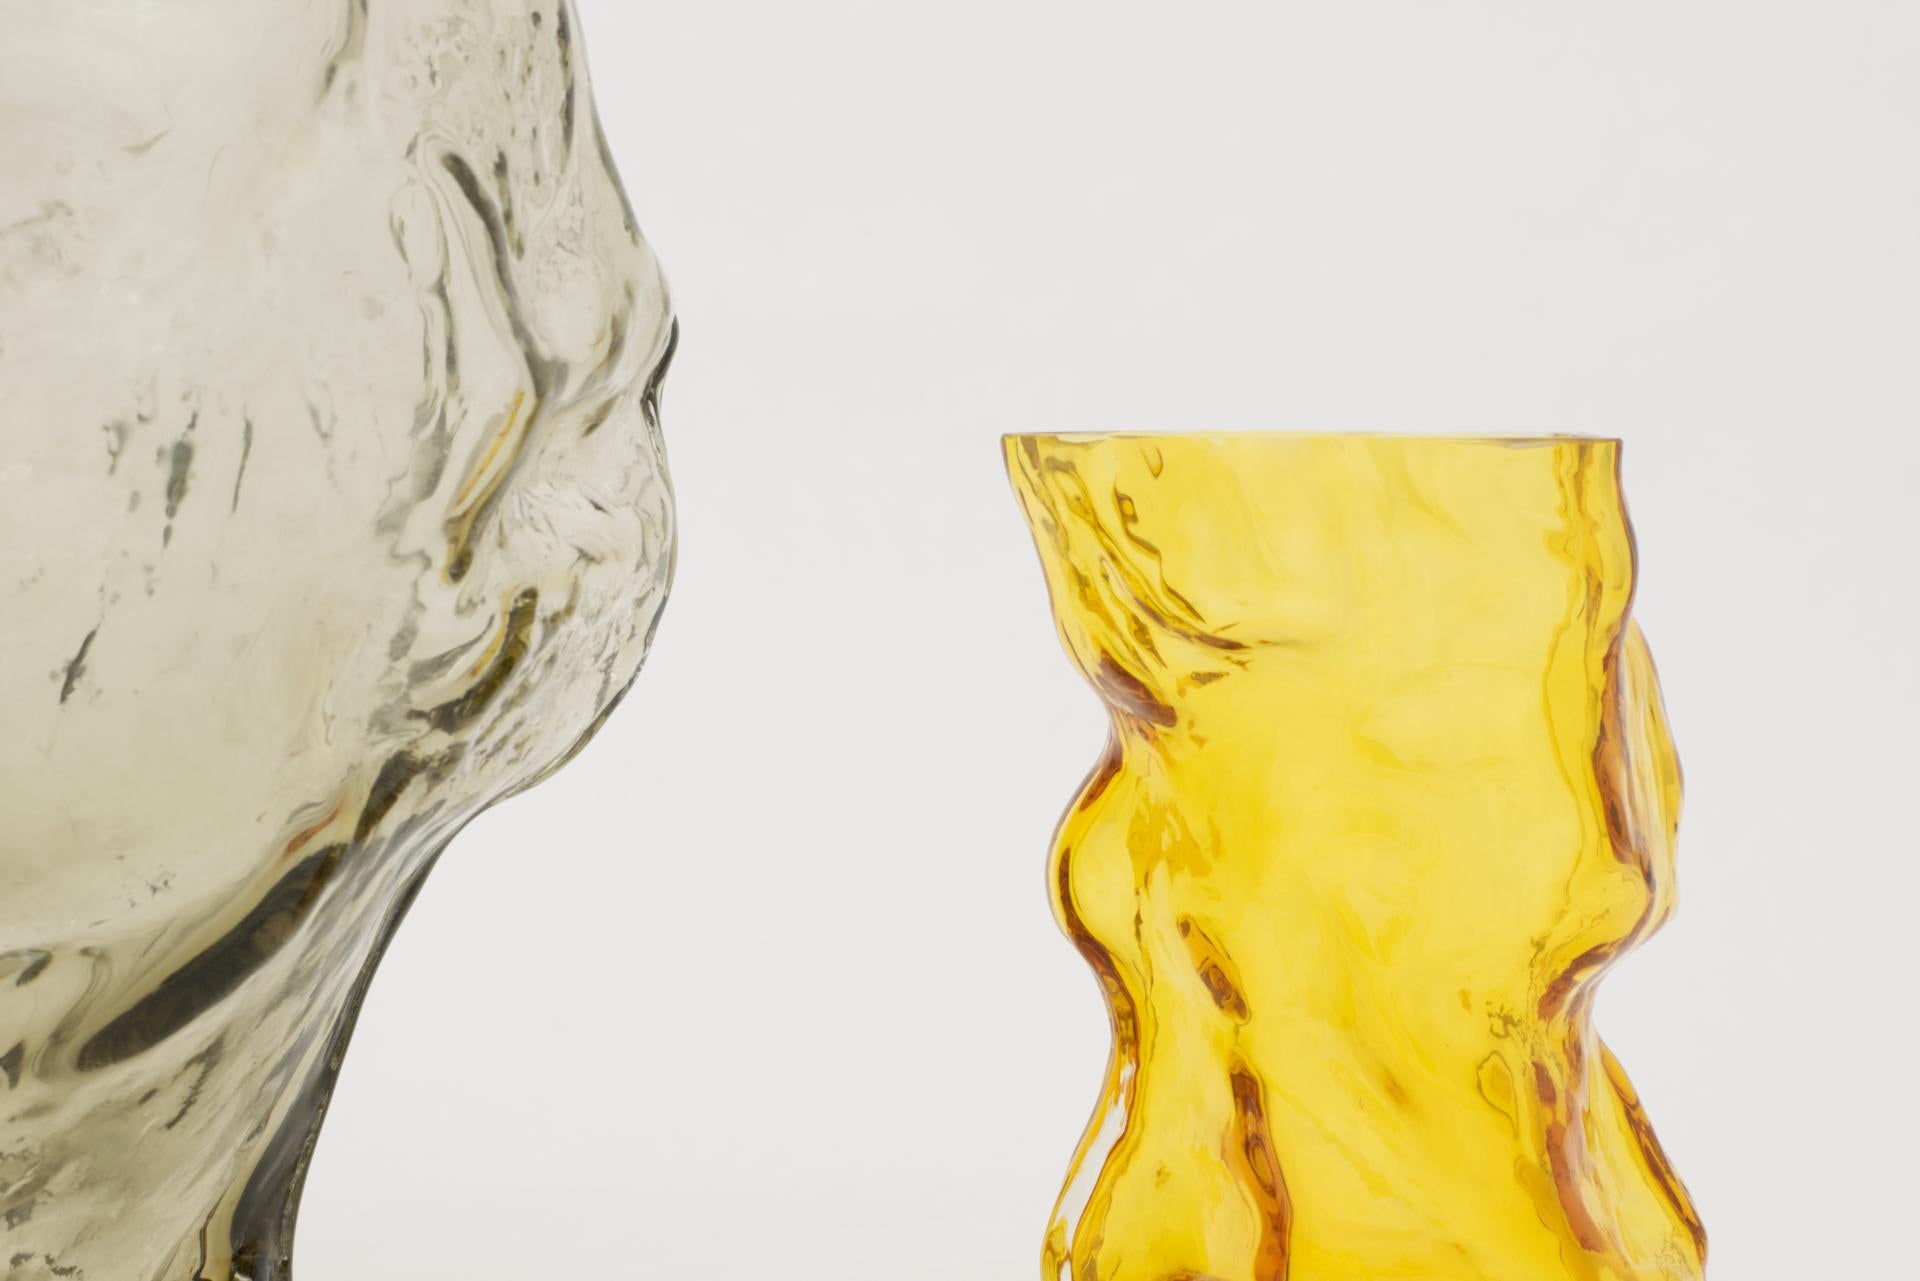 Danish Contemporary Design Unique Glass 'Mountain' Vase by Fos, Olive